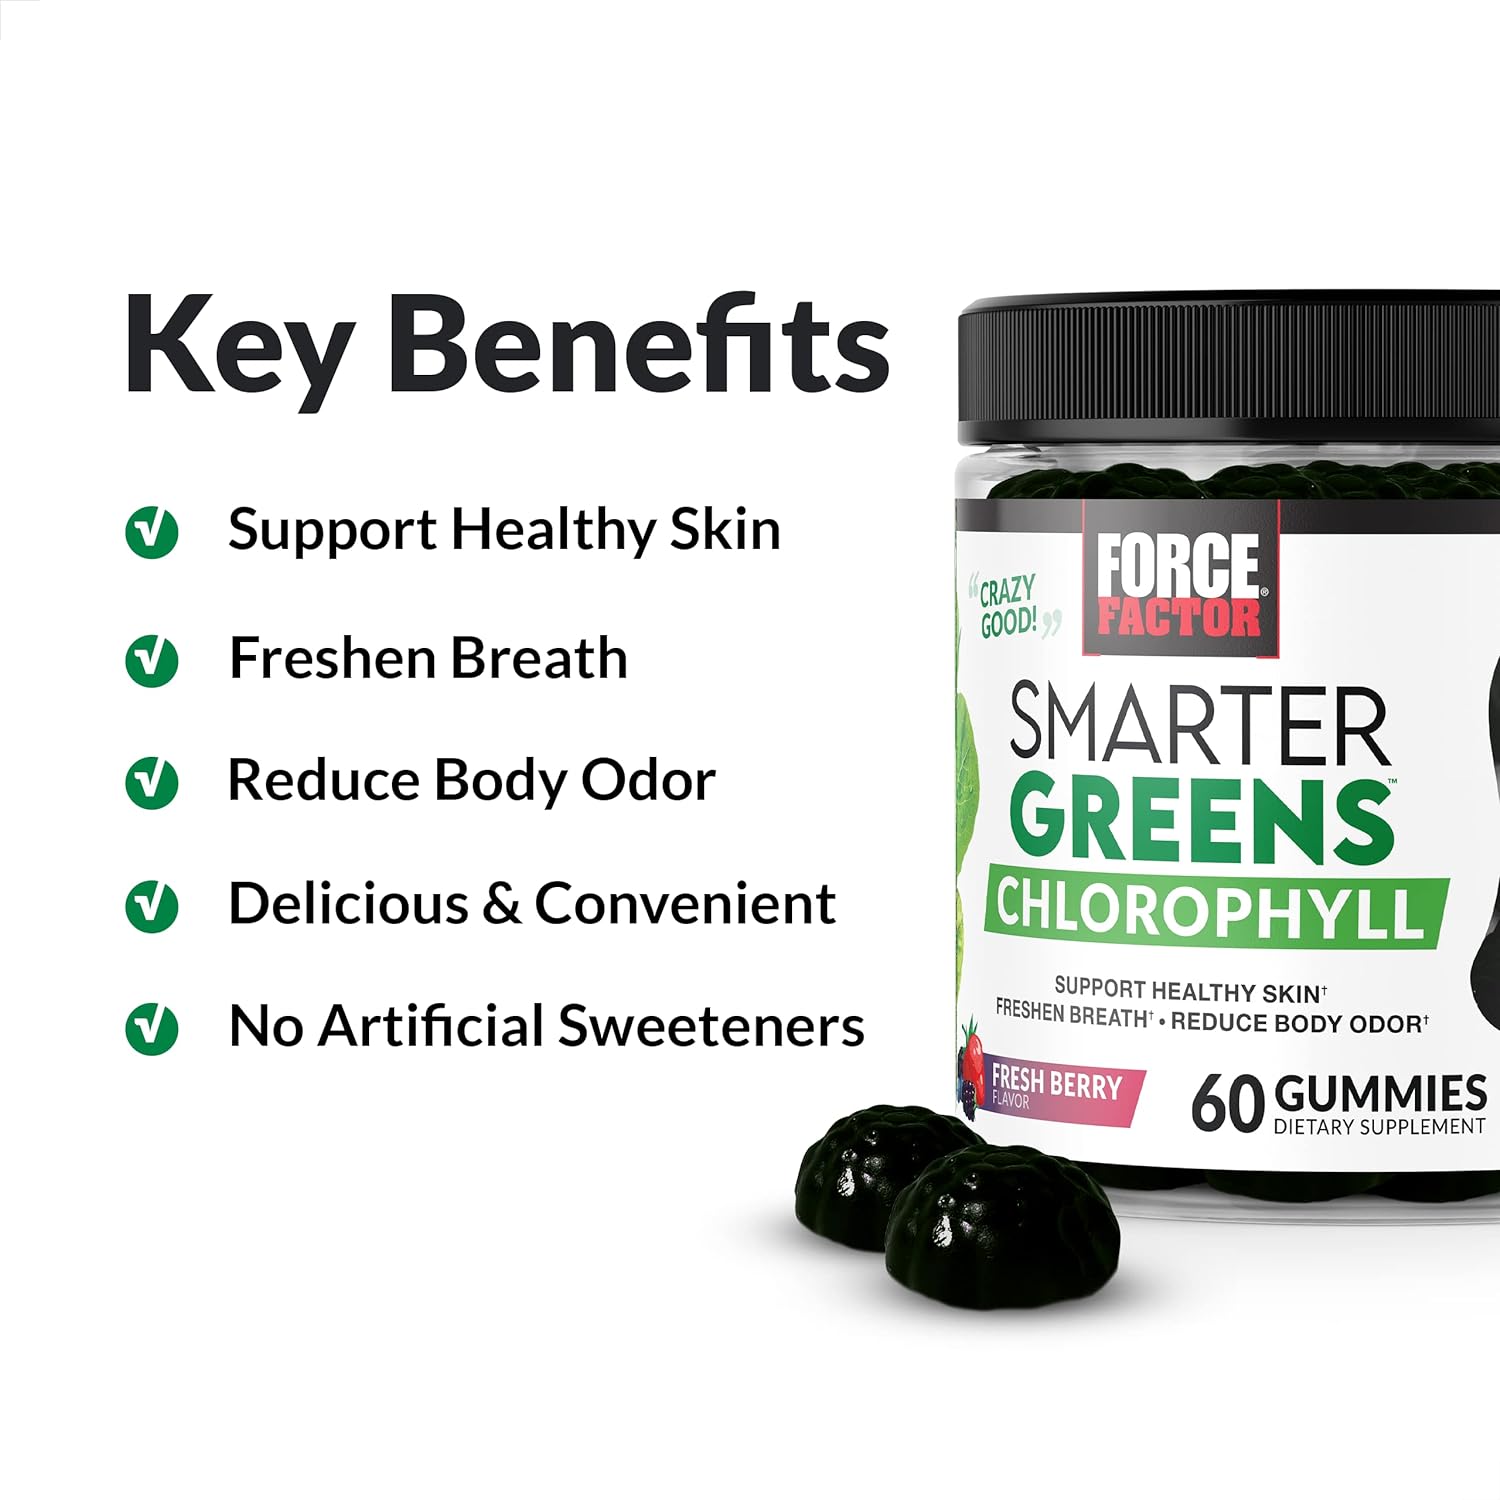 Force Factor Smarter Greens Chlorophyll Gummies 60ct